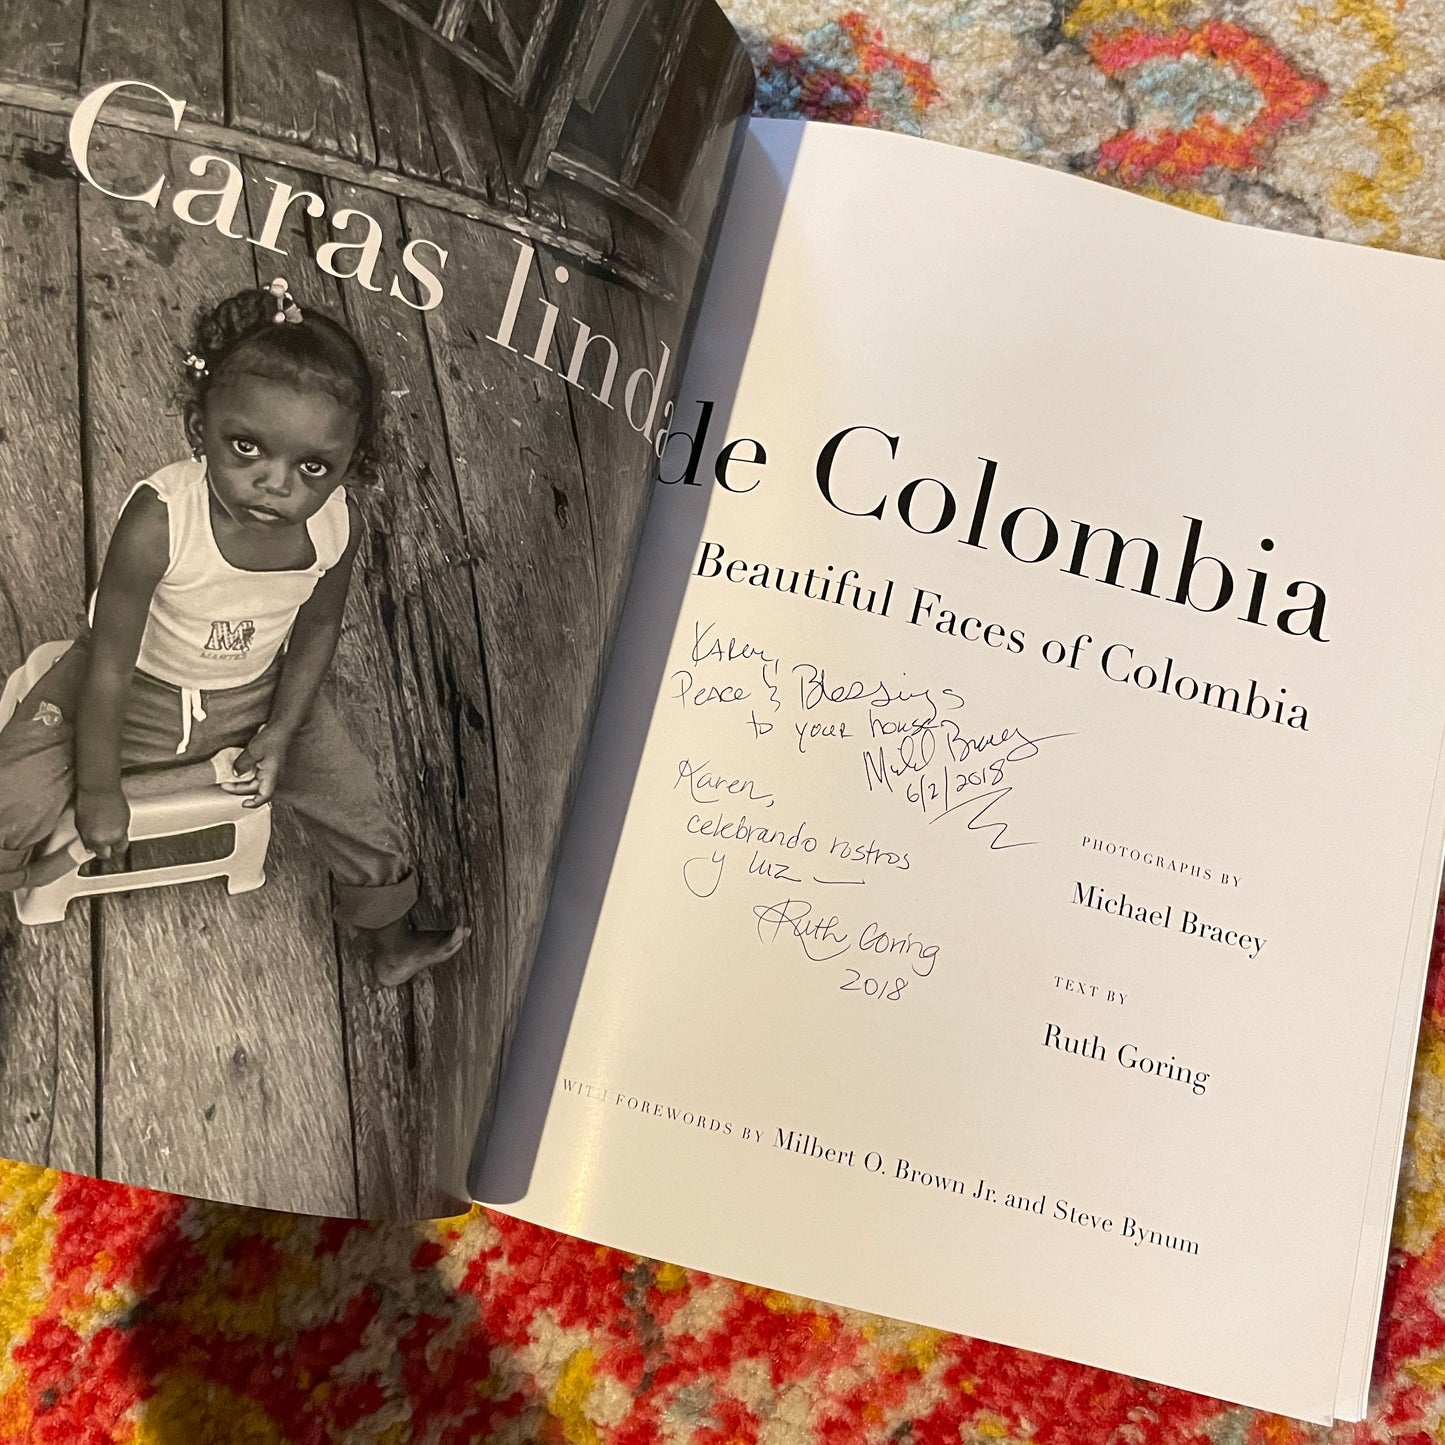 Caras Lindas de Colombia/Beautiful Faces of Colombia - Hardcover - AUTOGRAPHED Copy